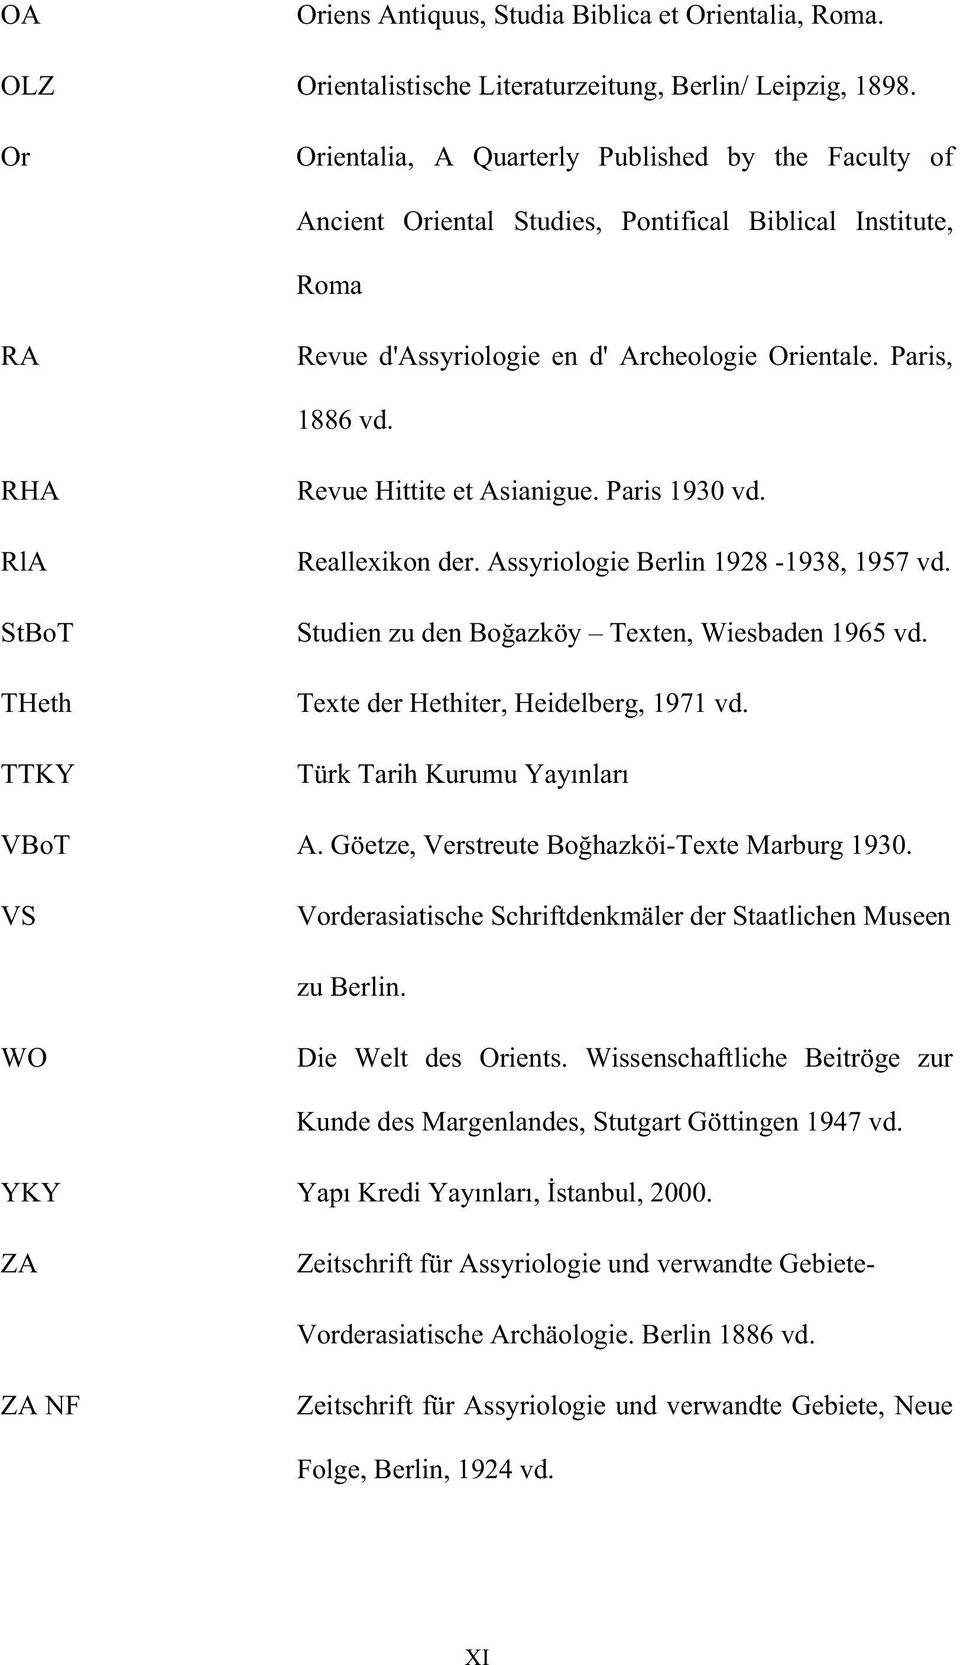 RHA RlA StBoT THeth TTKY Revue Hittite et Asianigue. Paris 1930 vd. Reallexikon der. Assyriologie Berlin 1928-1938, 1957 vd. Studien zu den Bo azköy Texten, Wiesbaden 1965 vd.